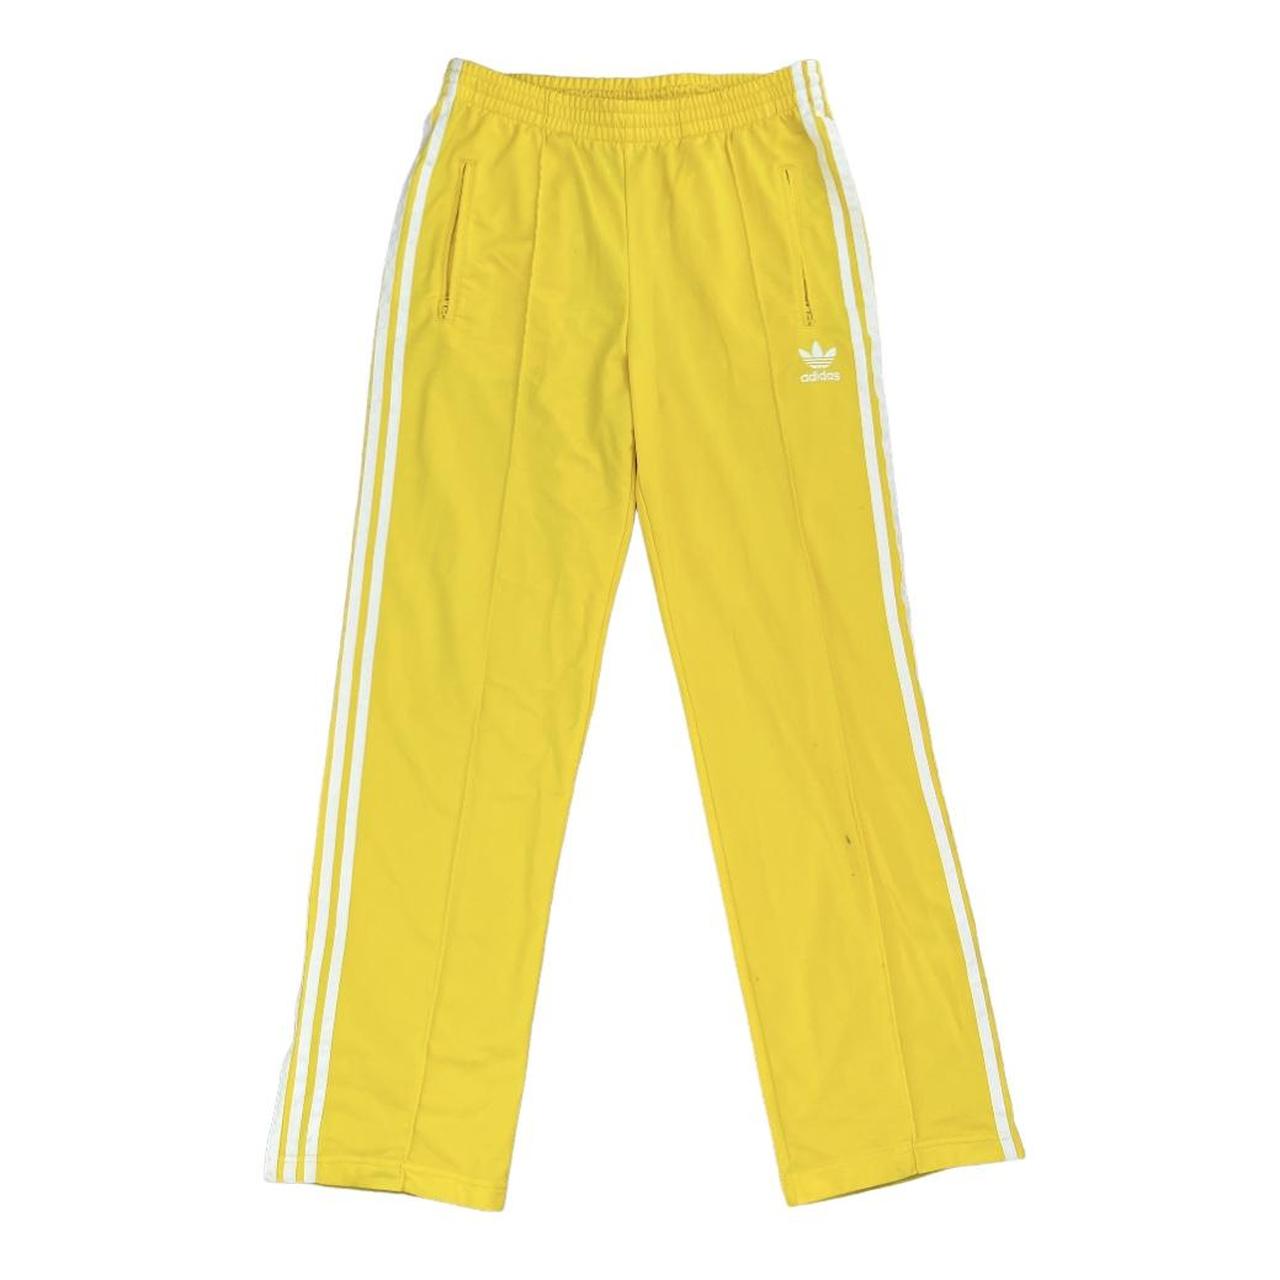 Adidas yellow stripe track pants. Straight leg track... - Depop